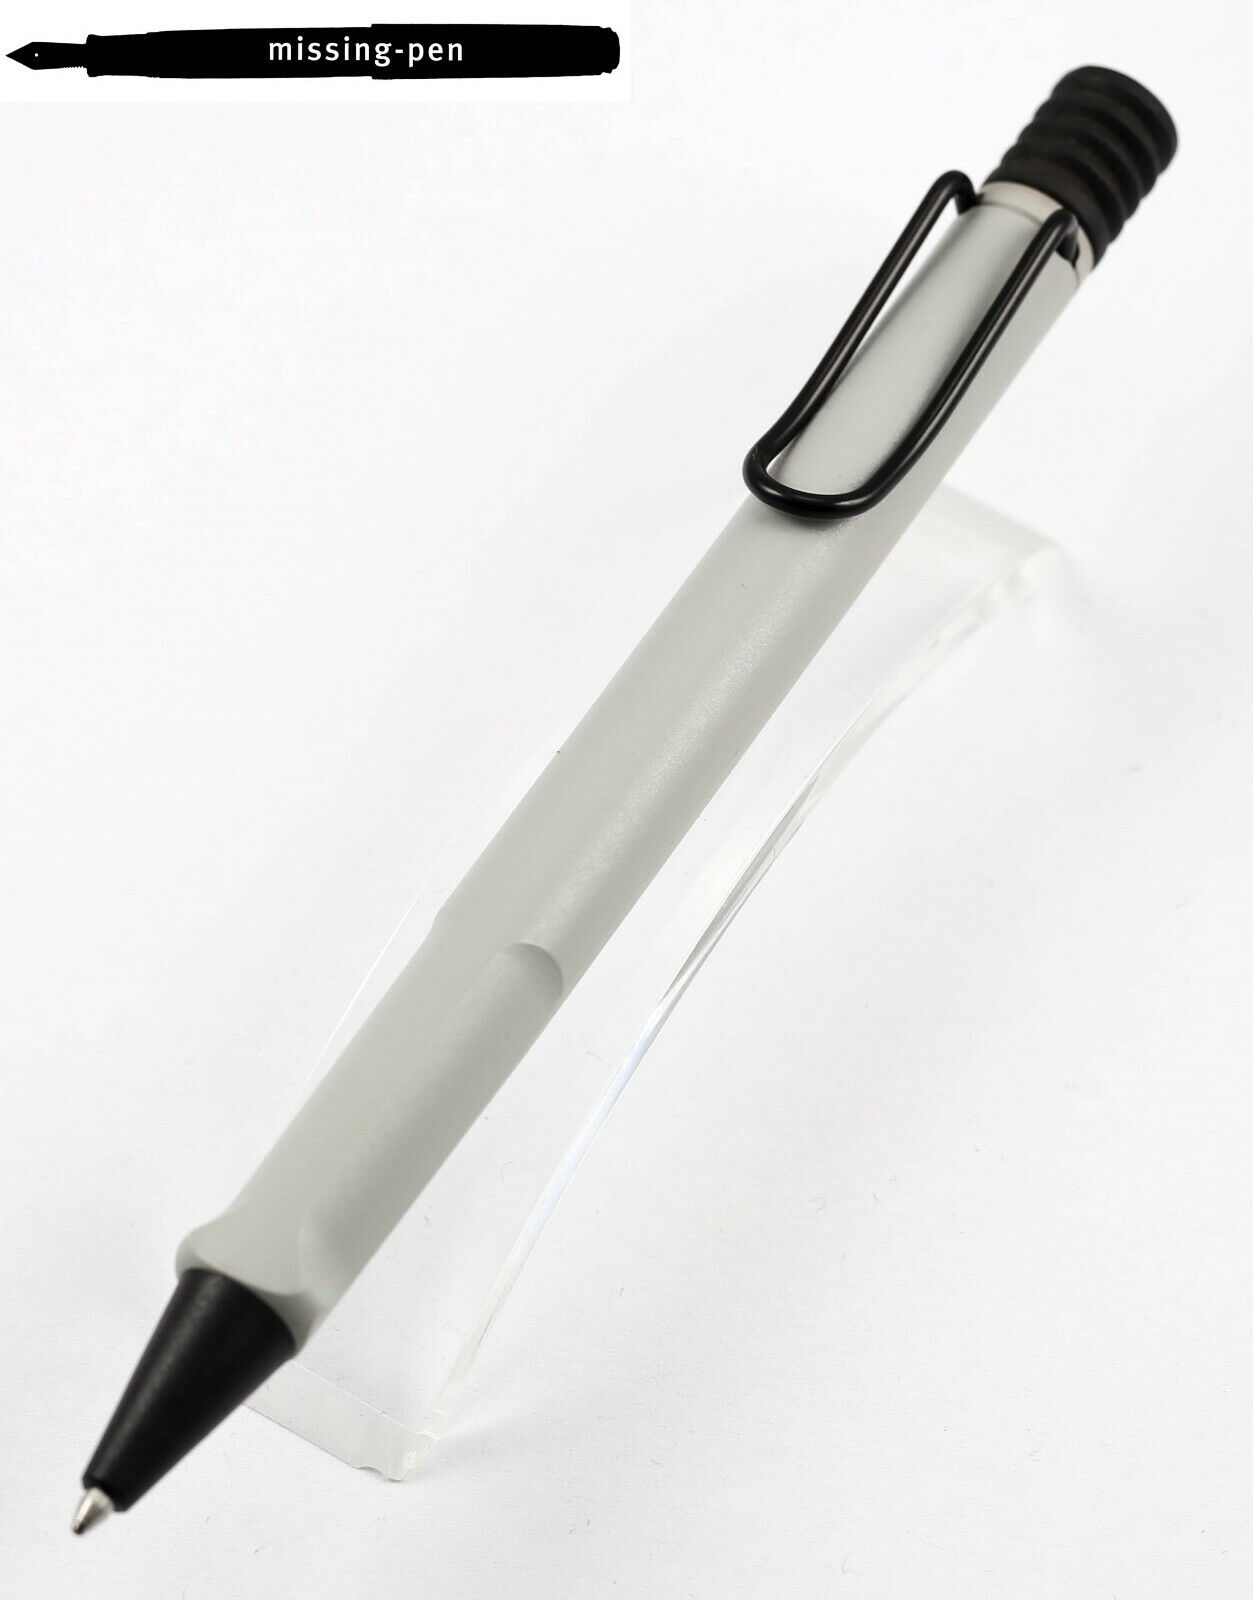 Lamy Safari Ballpoint Pen in old Color Grey / Griso with black clip, Model 213